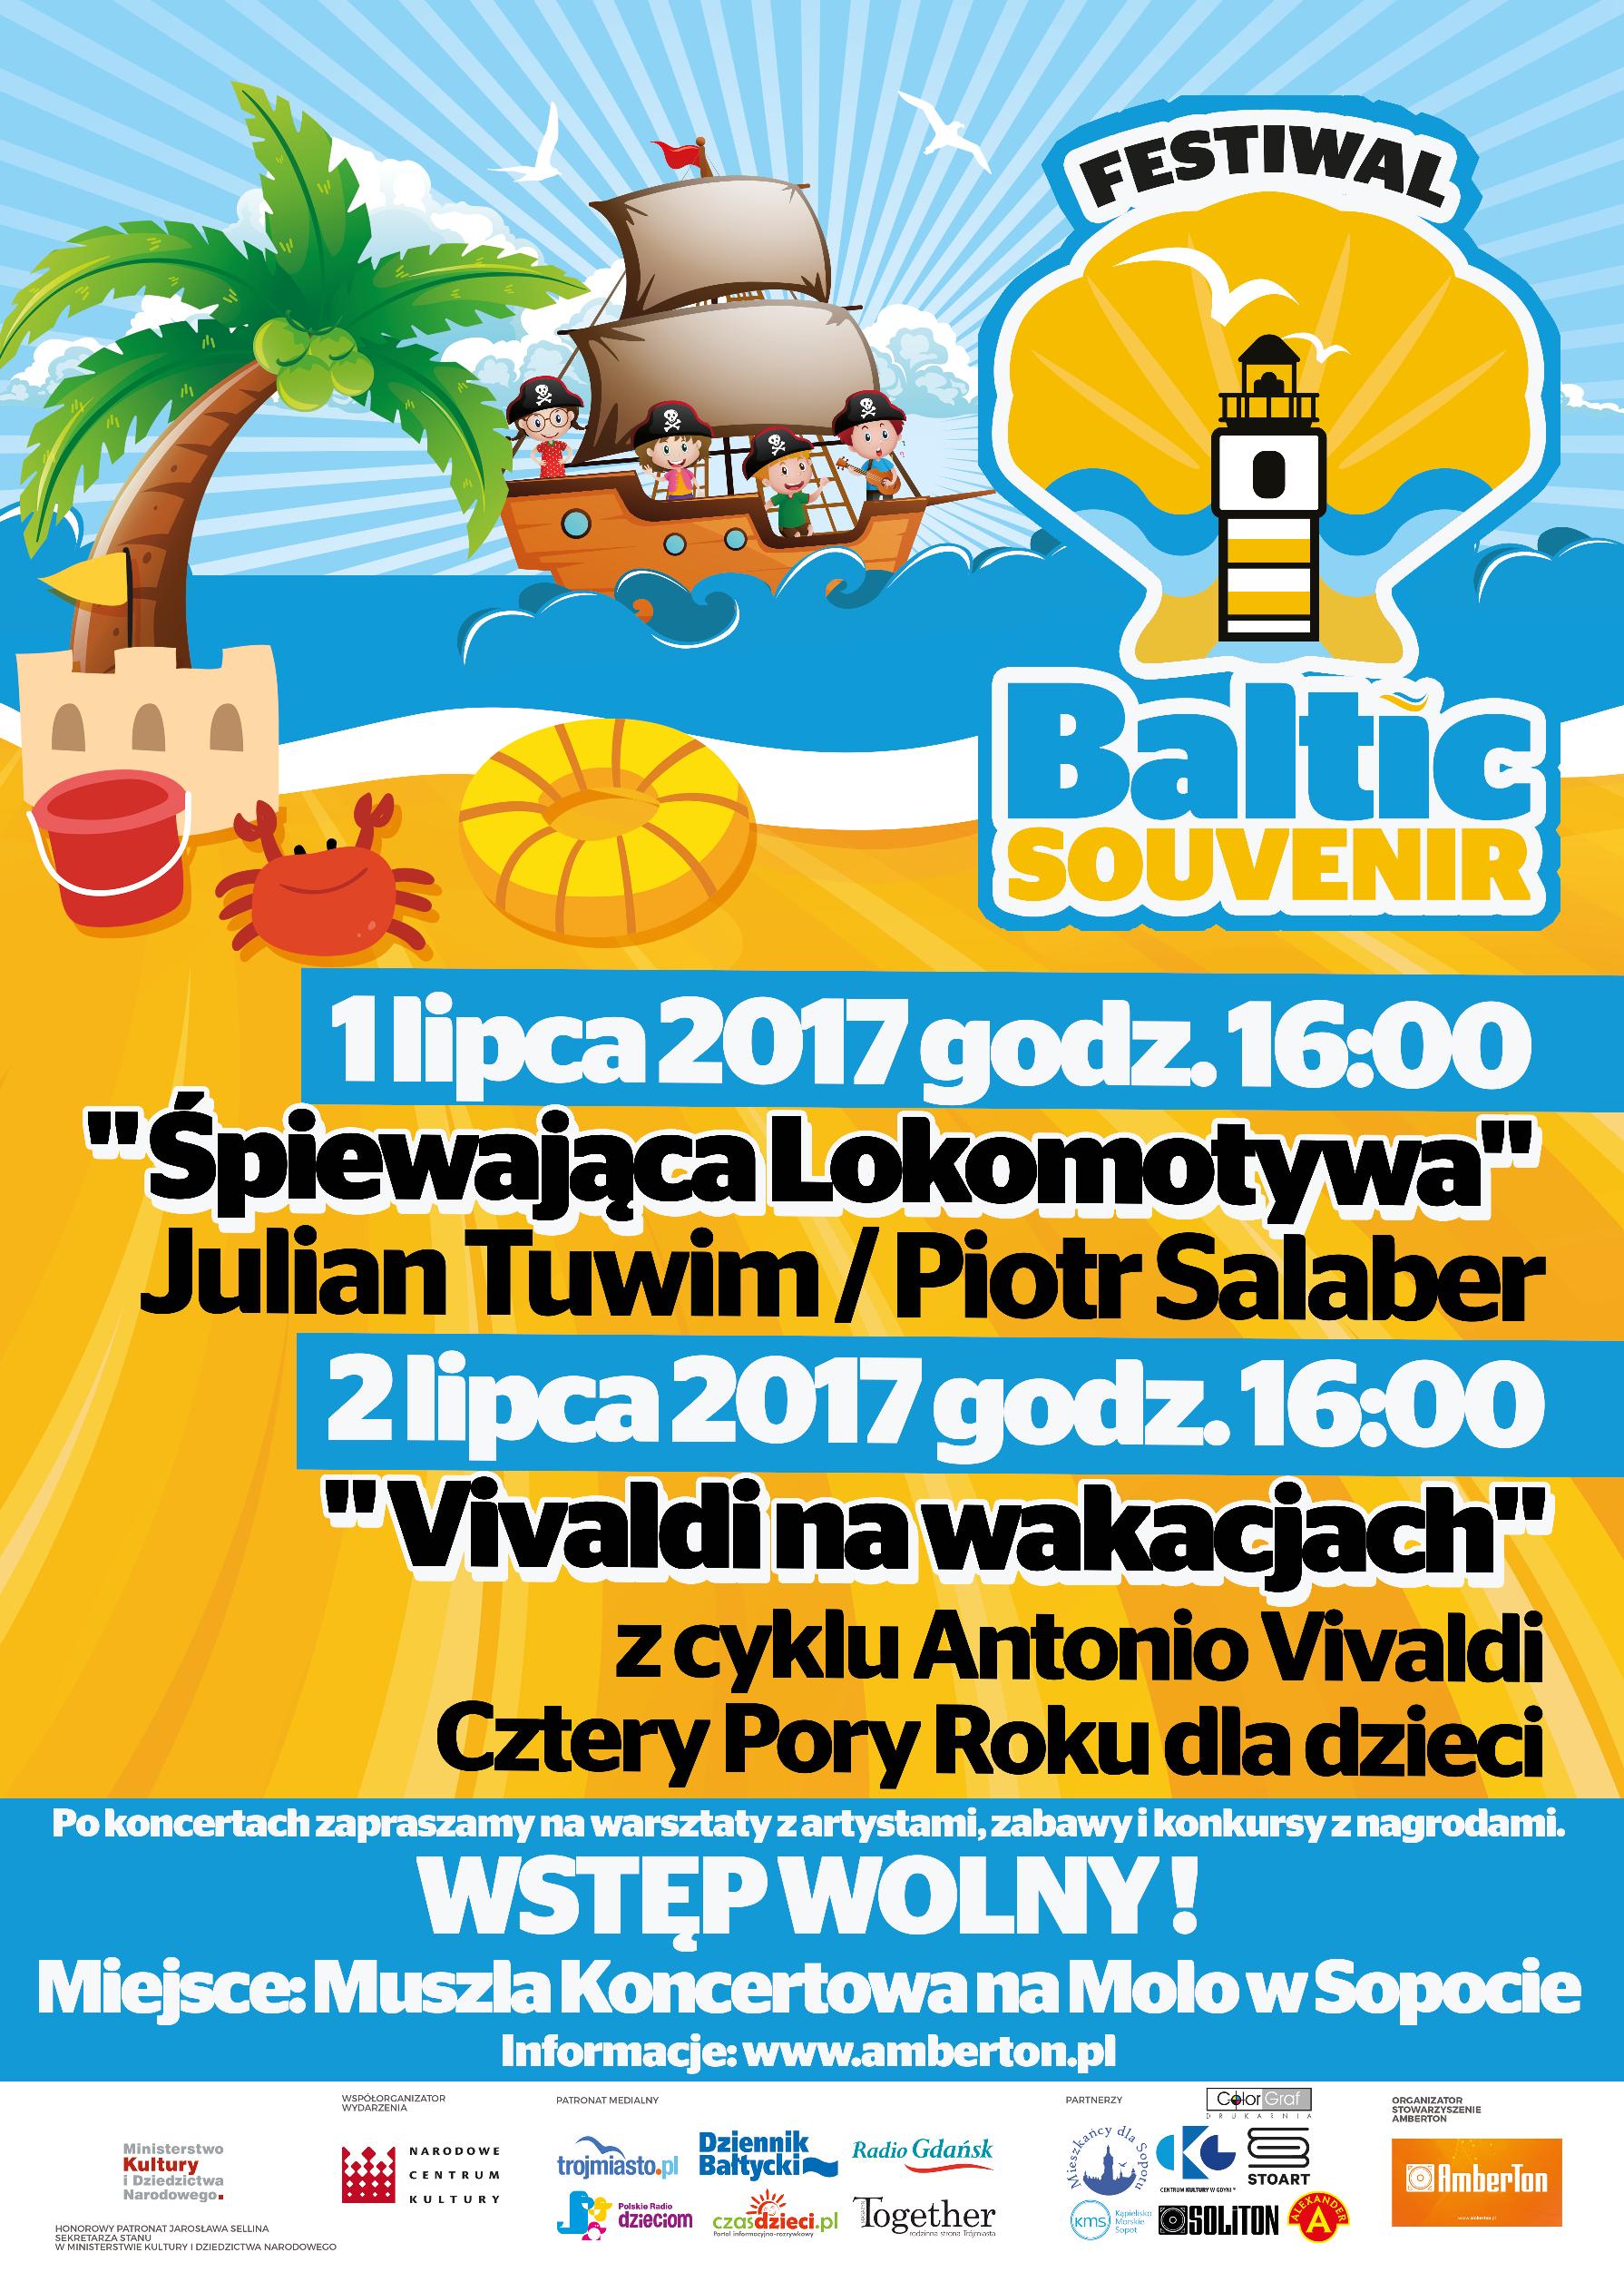 Festiwal Baltic Souvenir